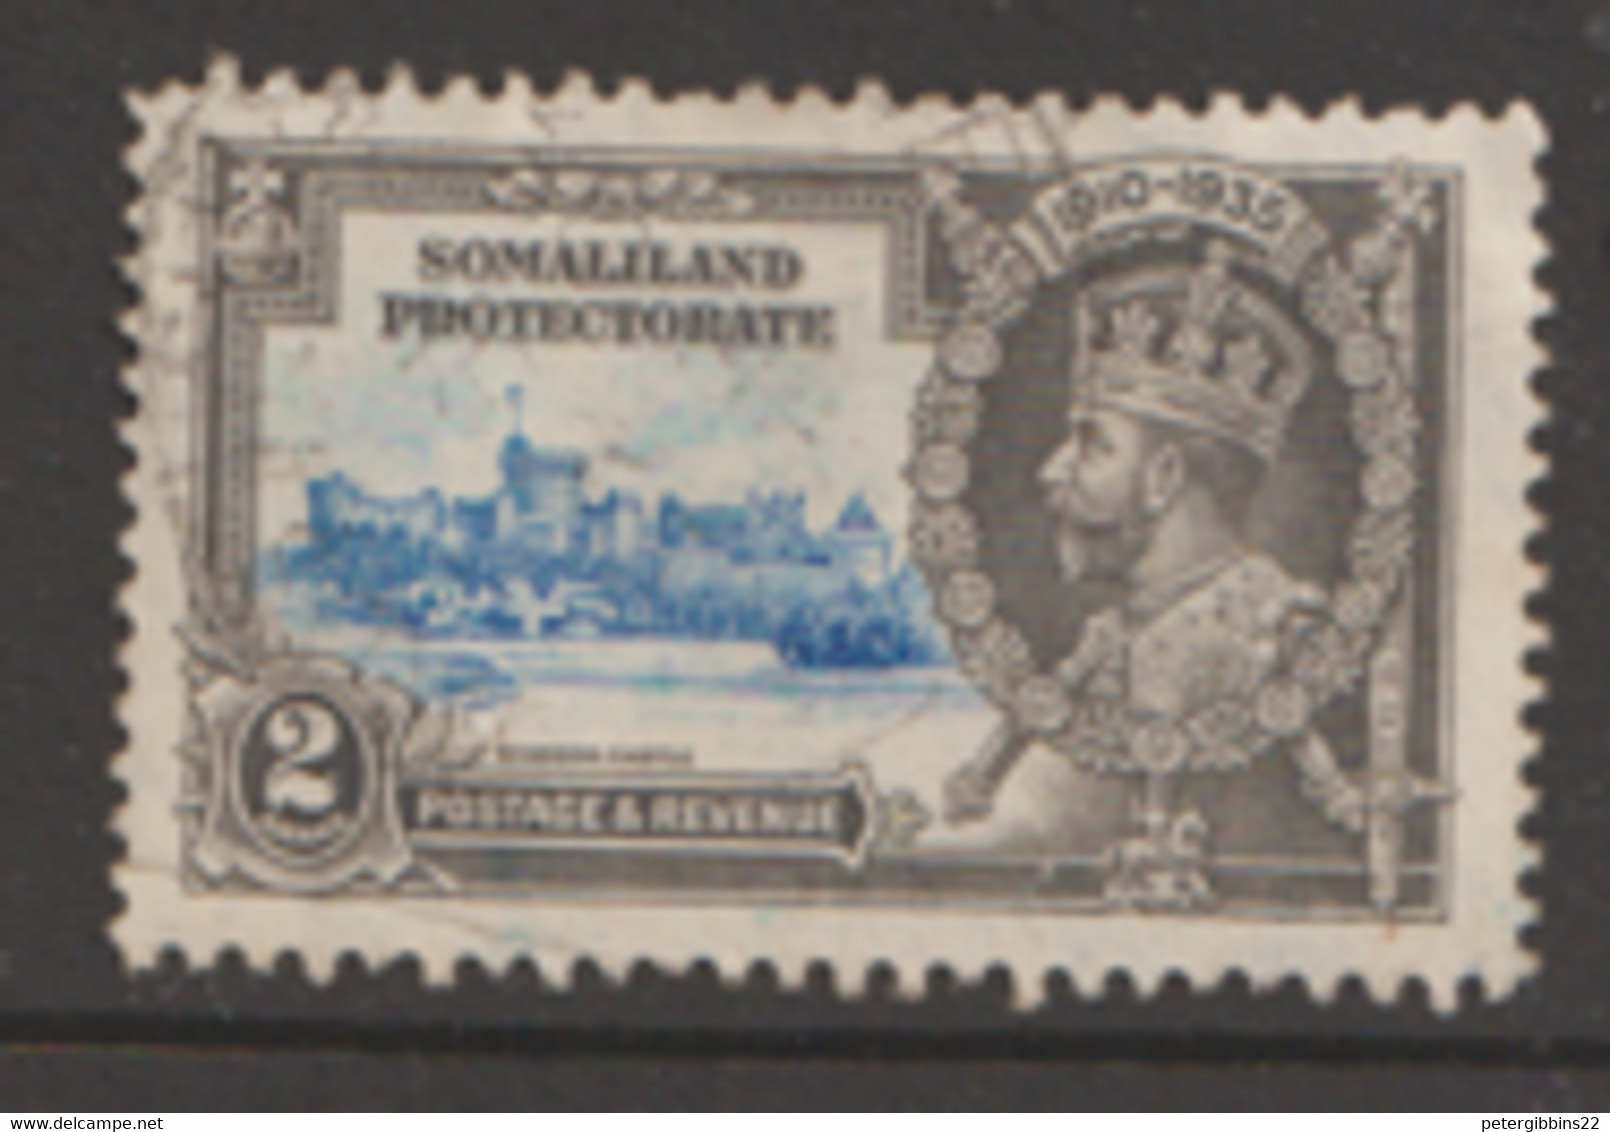 Somaliland Protectorate   1935 SG 87  Silver Jubilee   Fine Used - Somaliland (Protectoraat ...-1959)